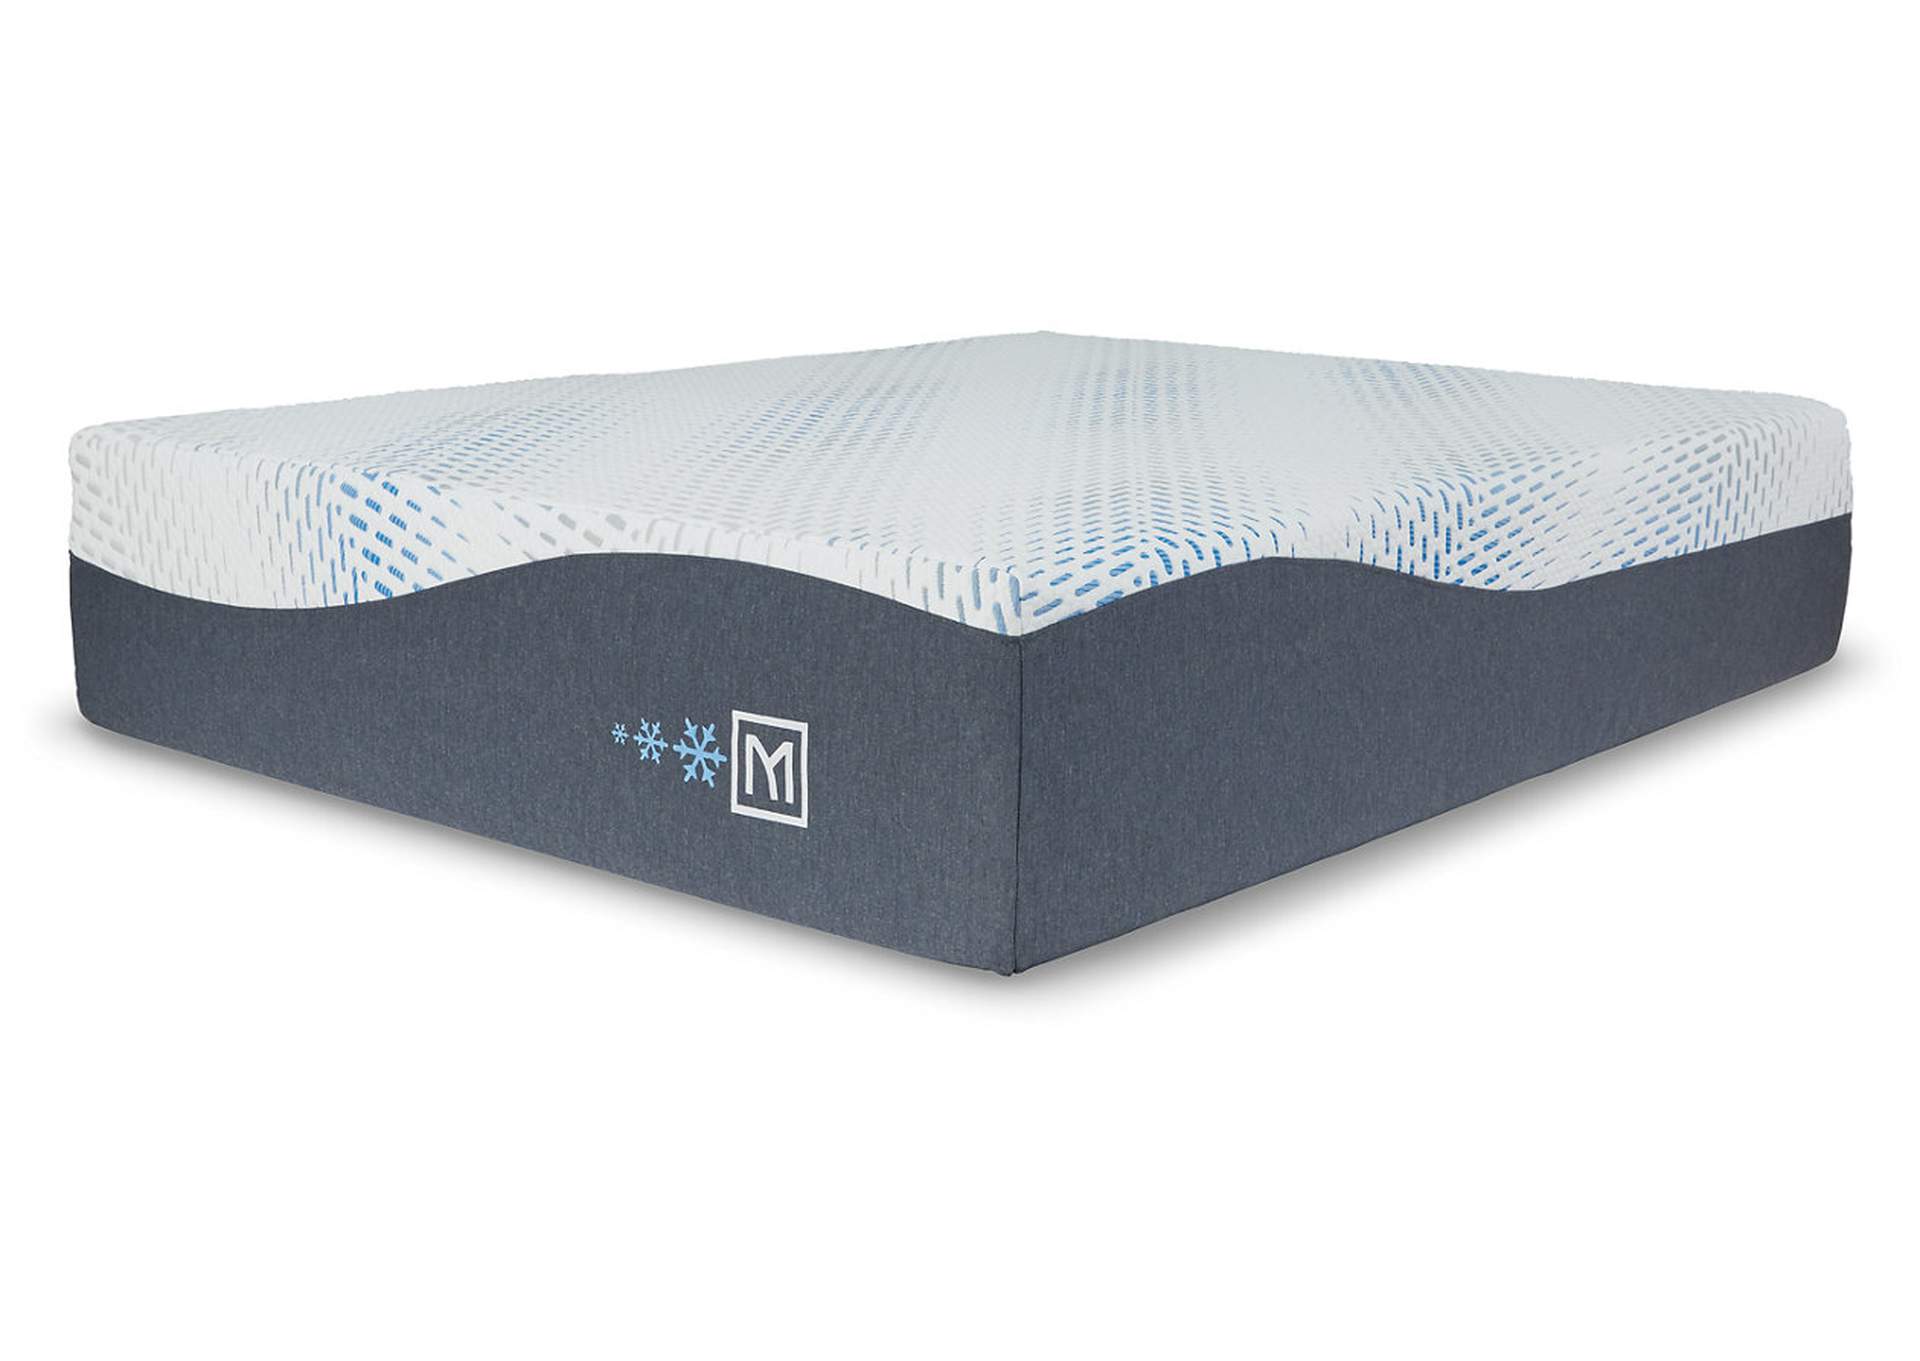 Millennium Luxury Gel Memory Foam Twin XL Mattress,Sierra Sleep by Ashley